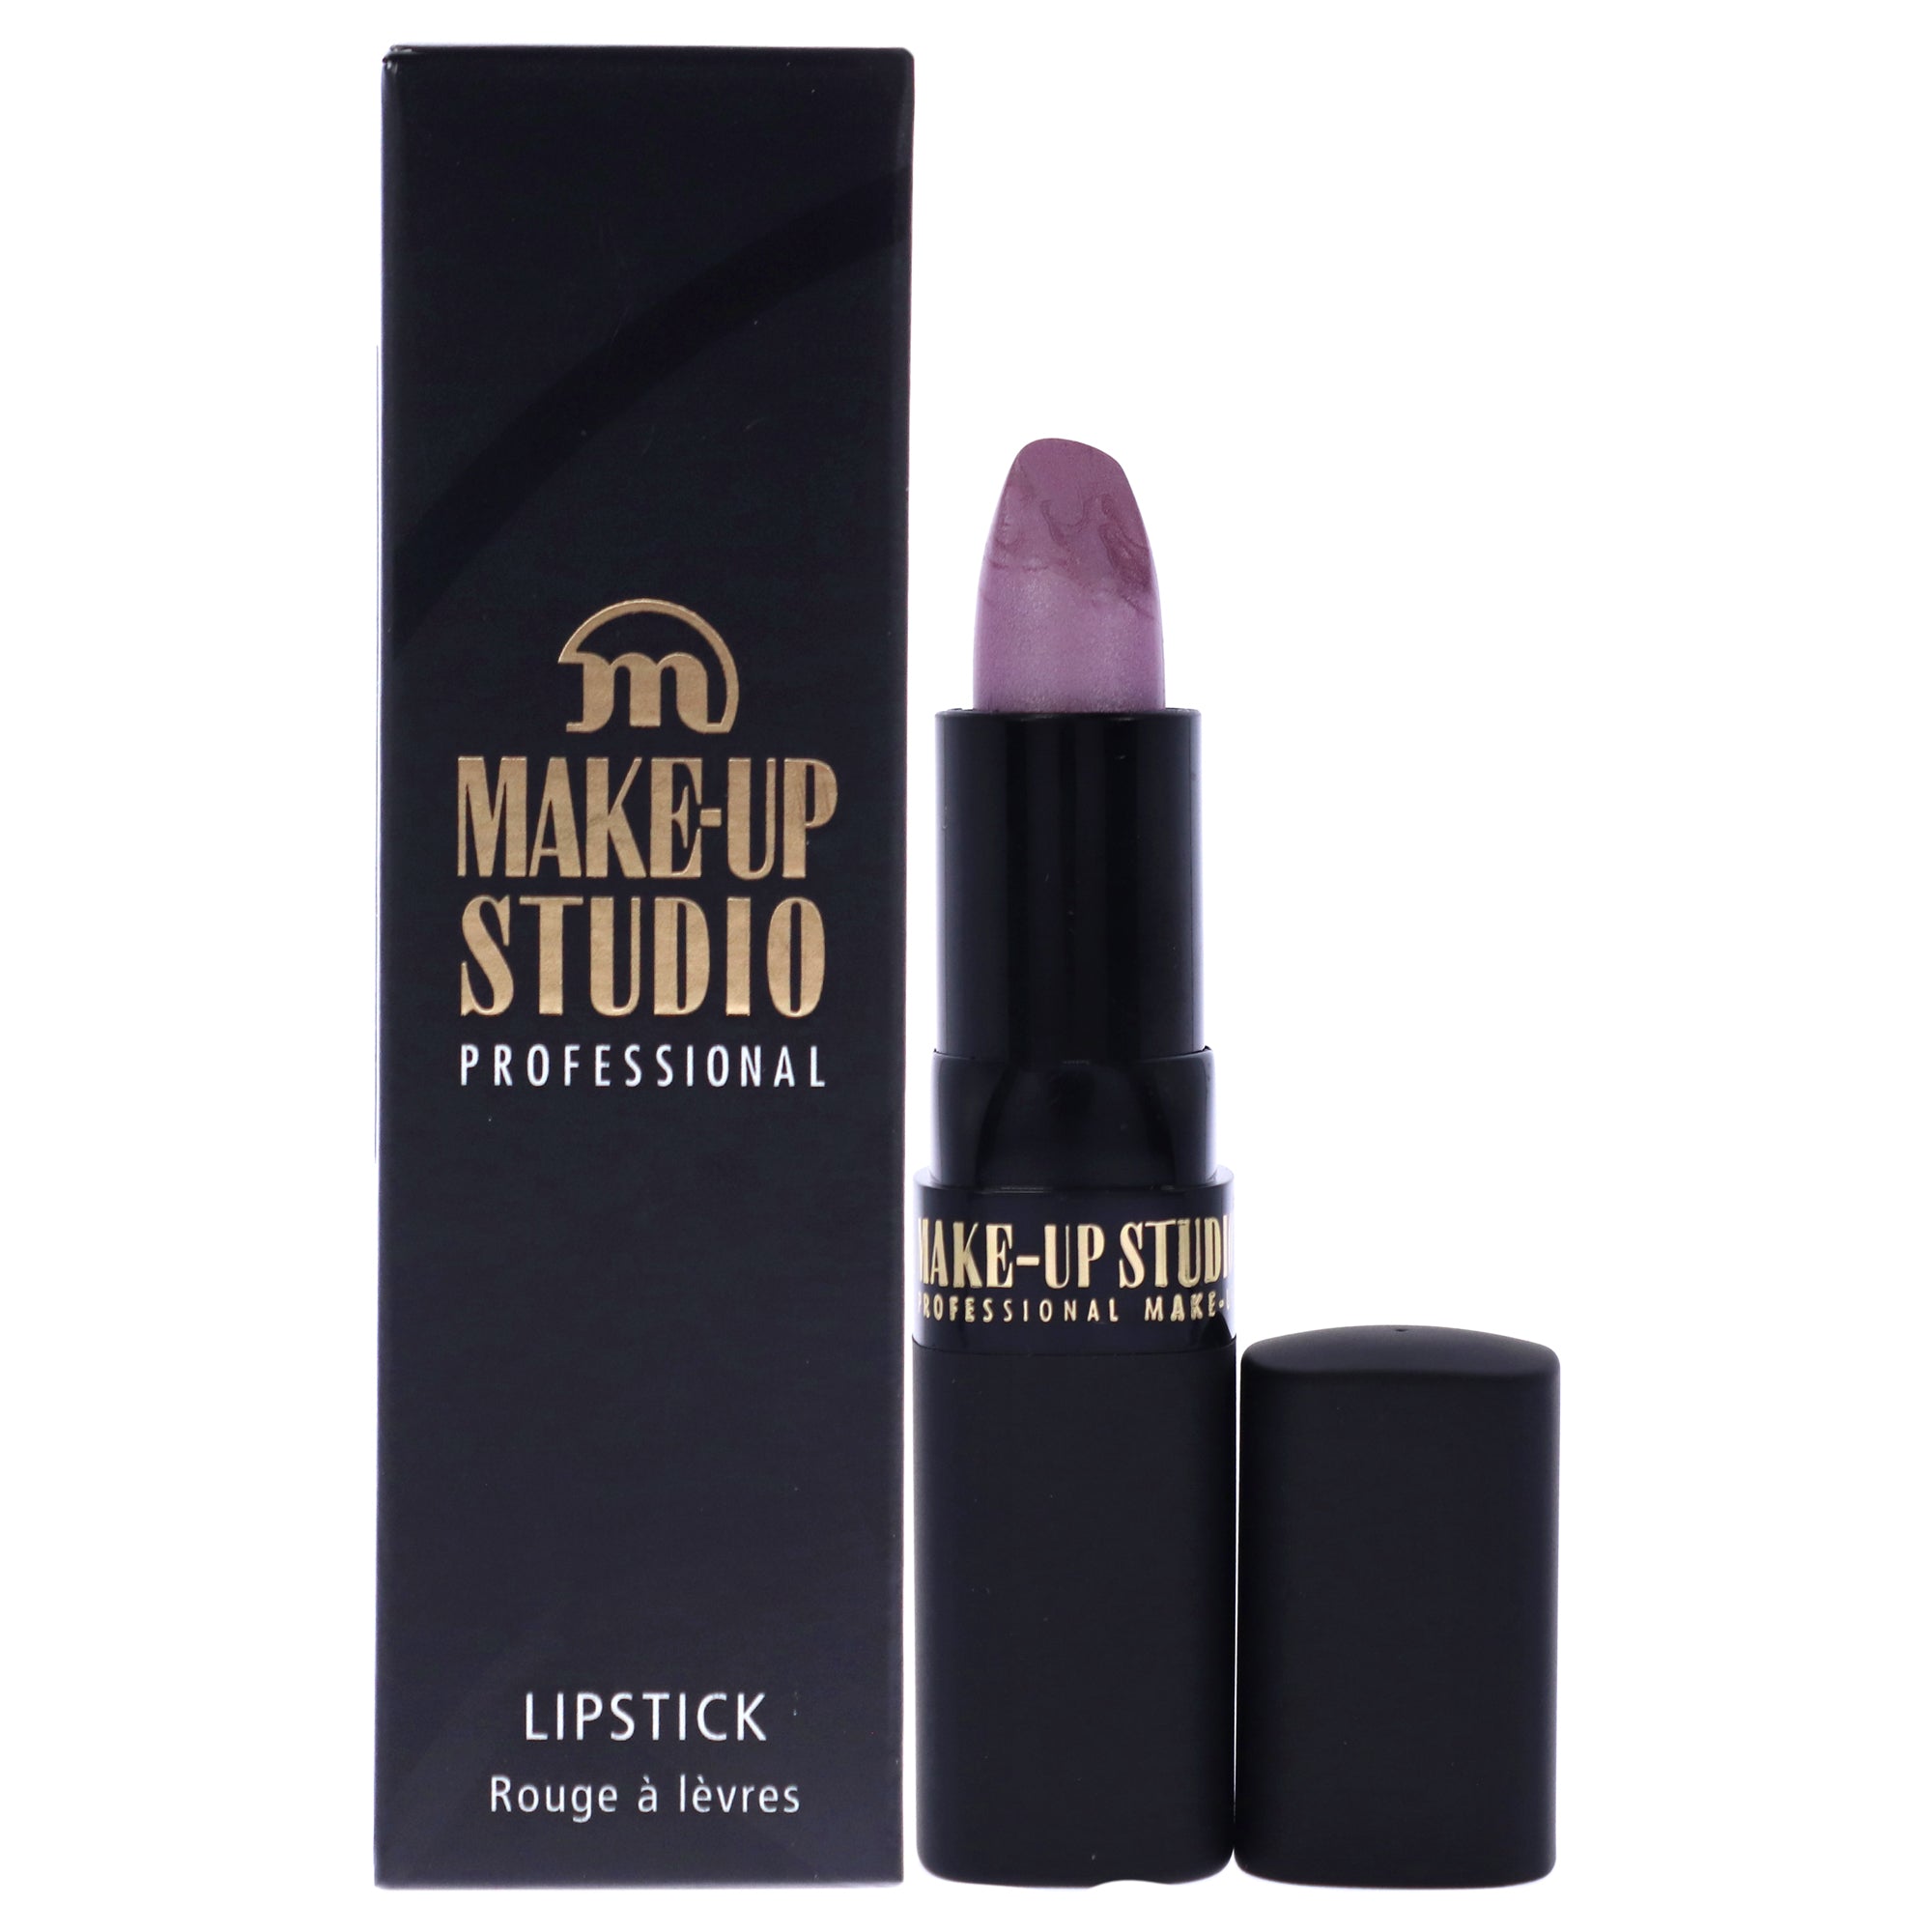 Lipstick - 47 by Make-Up Studio for Women - 0.13 oz Lipstick